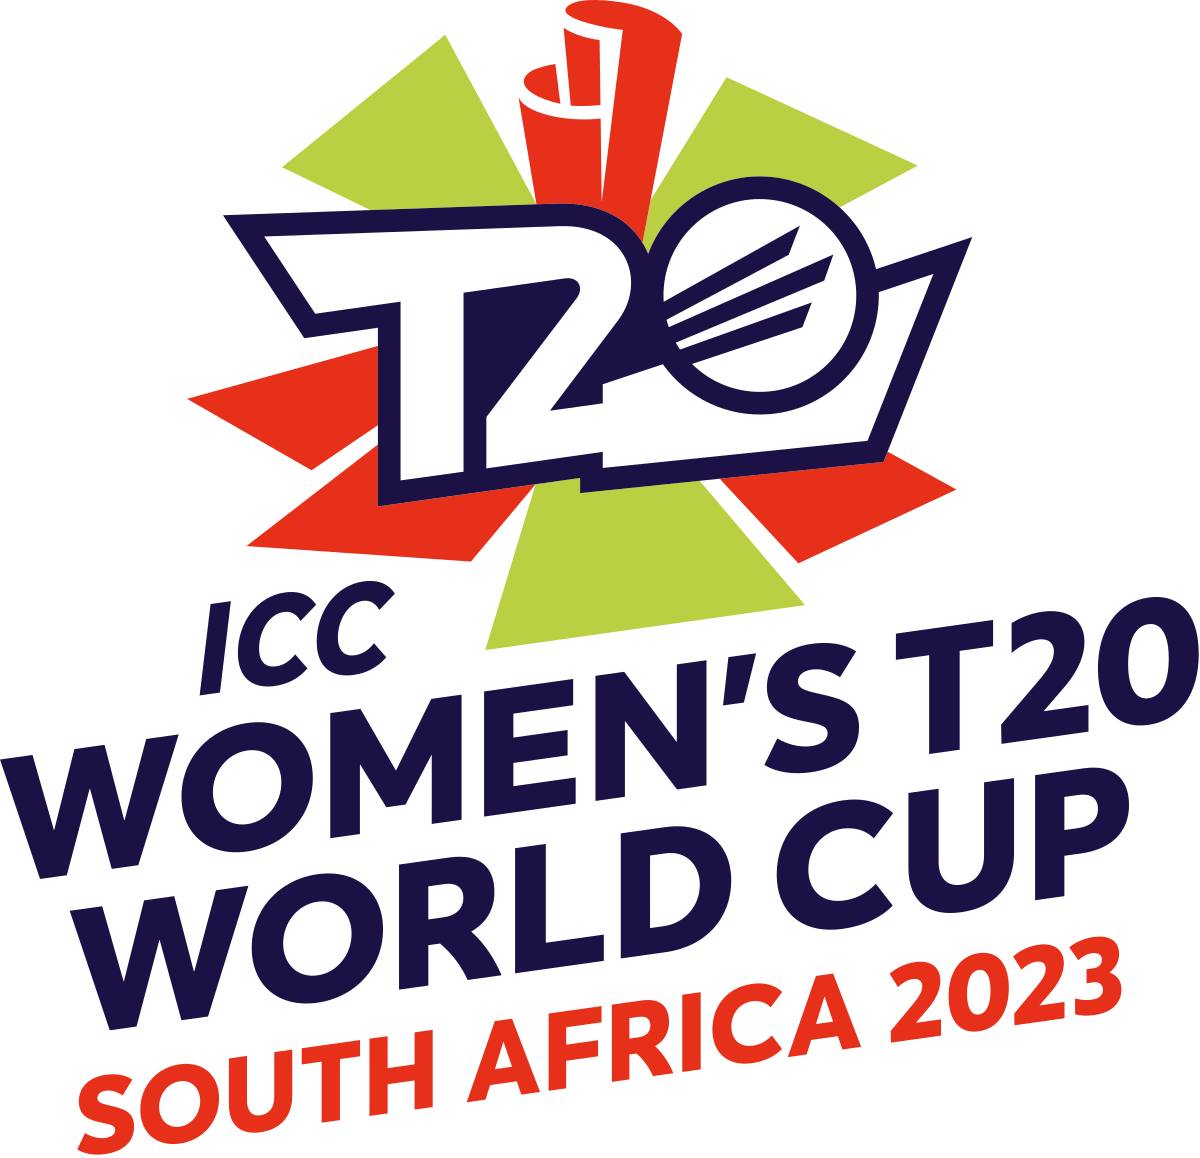 Official ICC Women's T20 World Cup 2023 Website